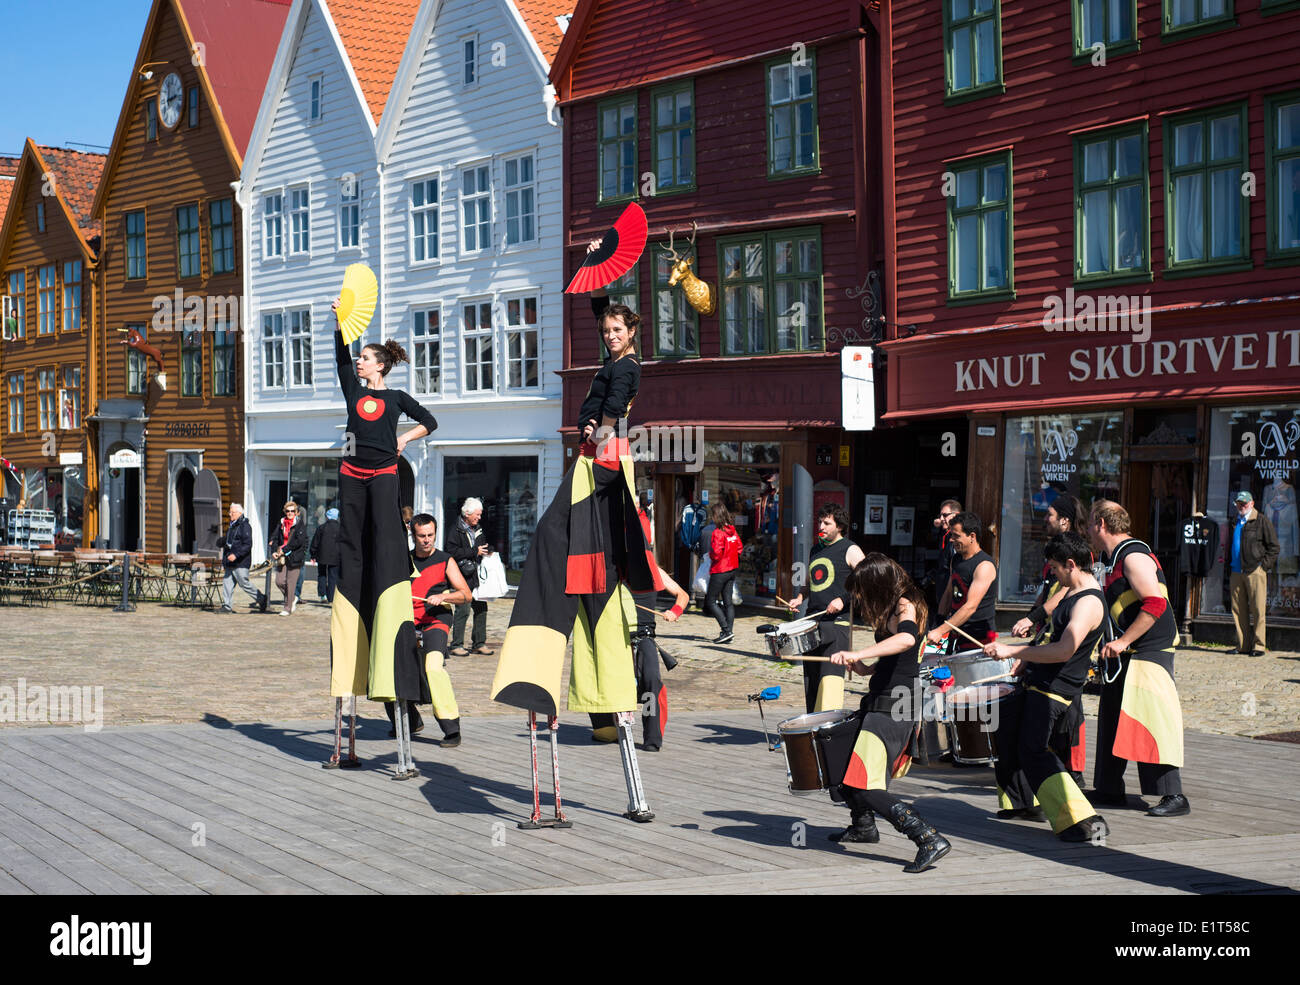 Street performers by the old wharfside buildings of Bryggen, in Bergen, Norway Stock Photo